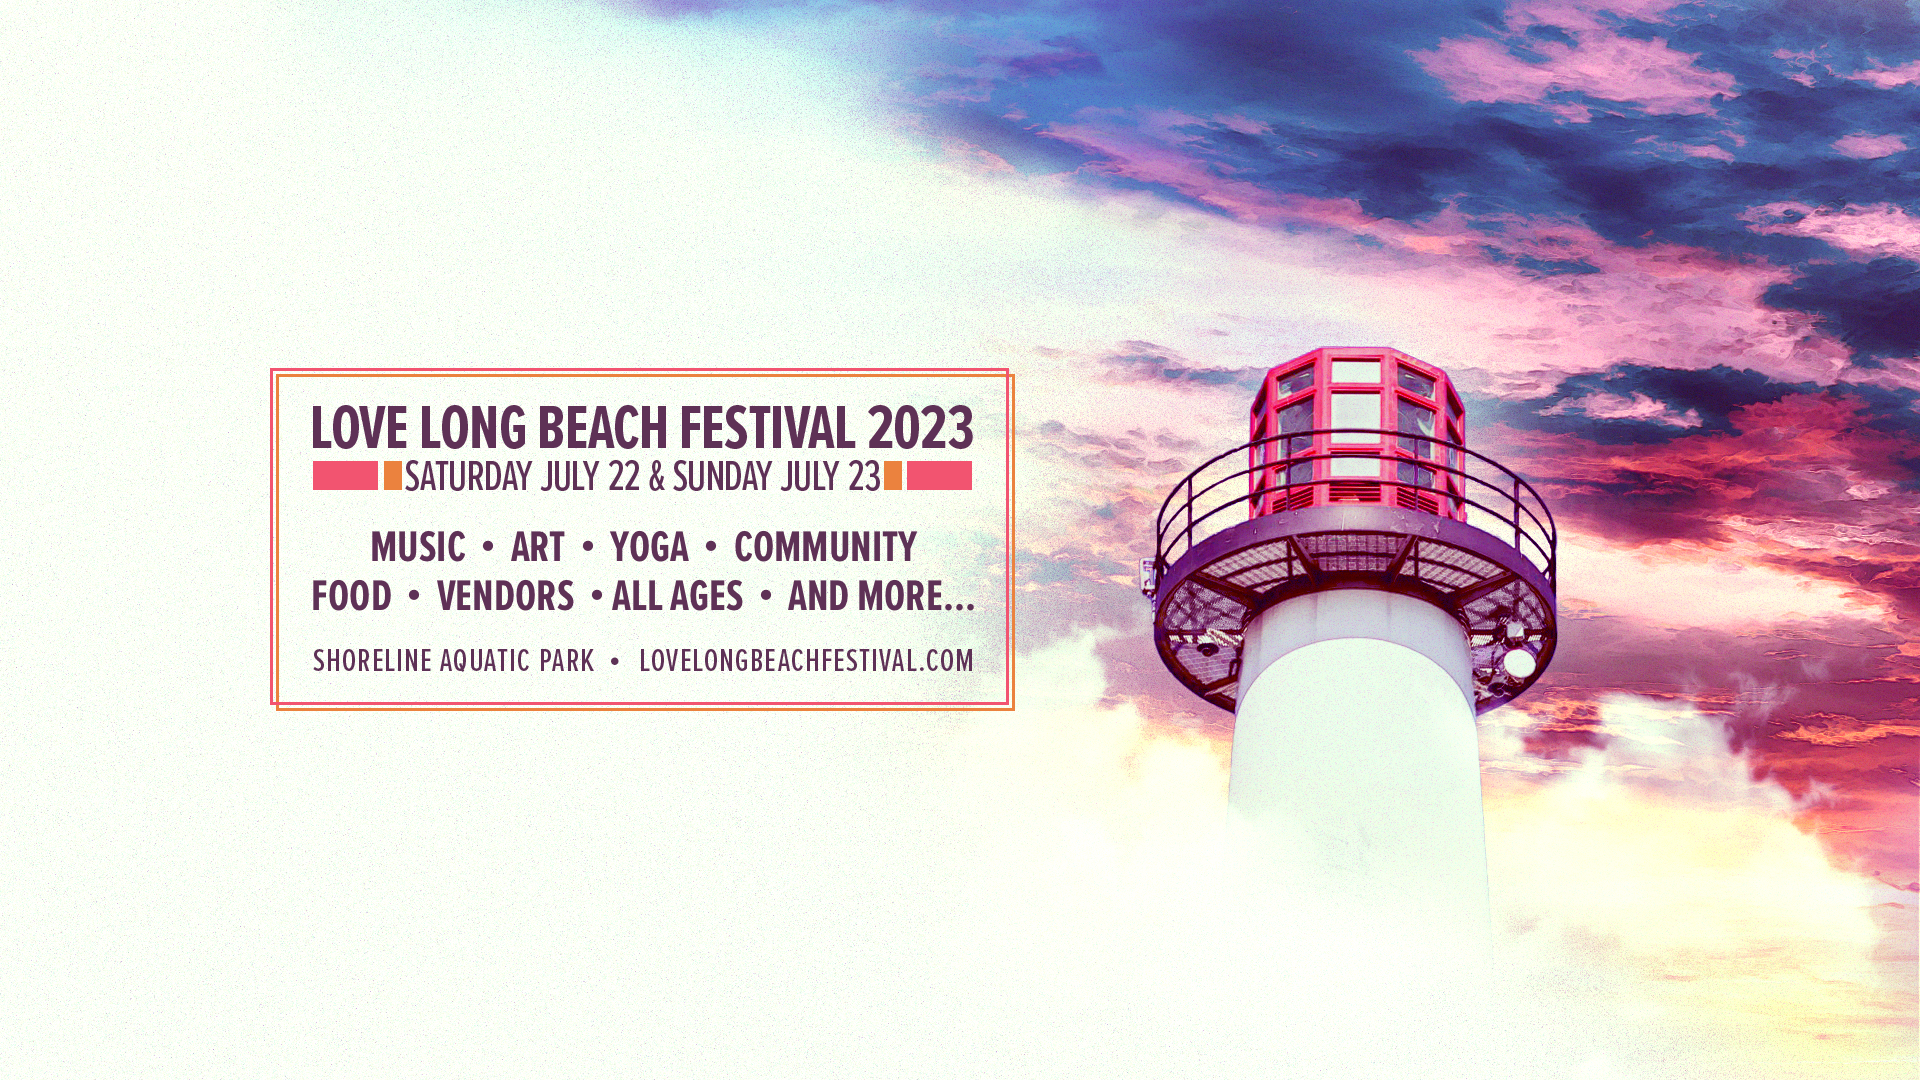 Love Long Beach Festival 2023 - フライヤー表